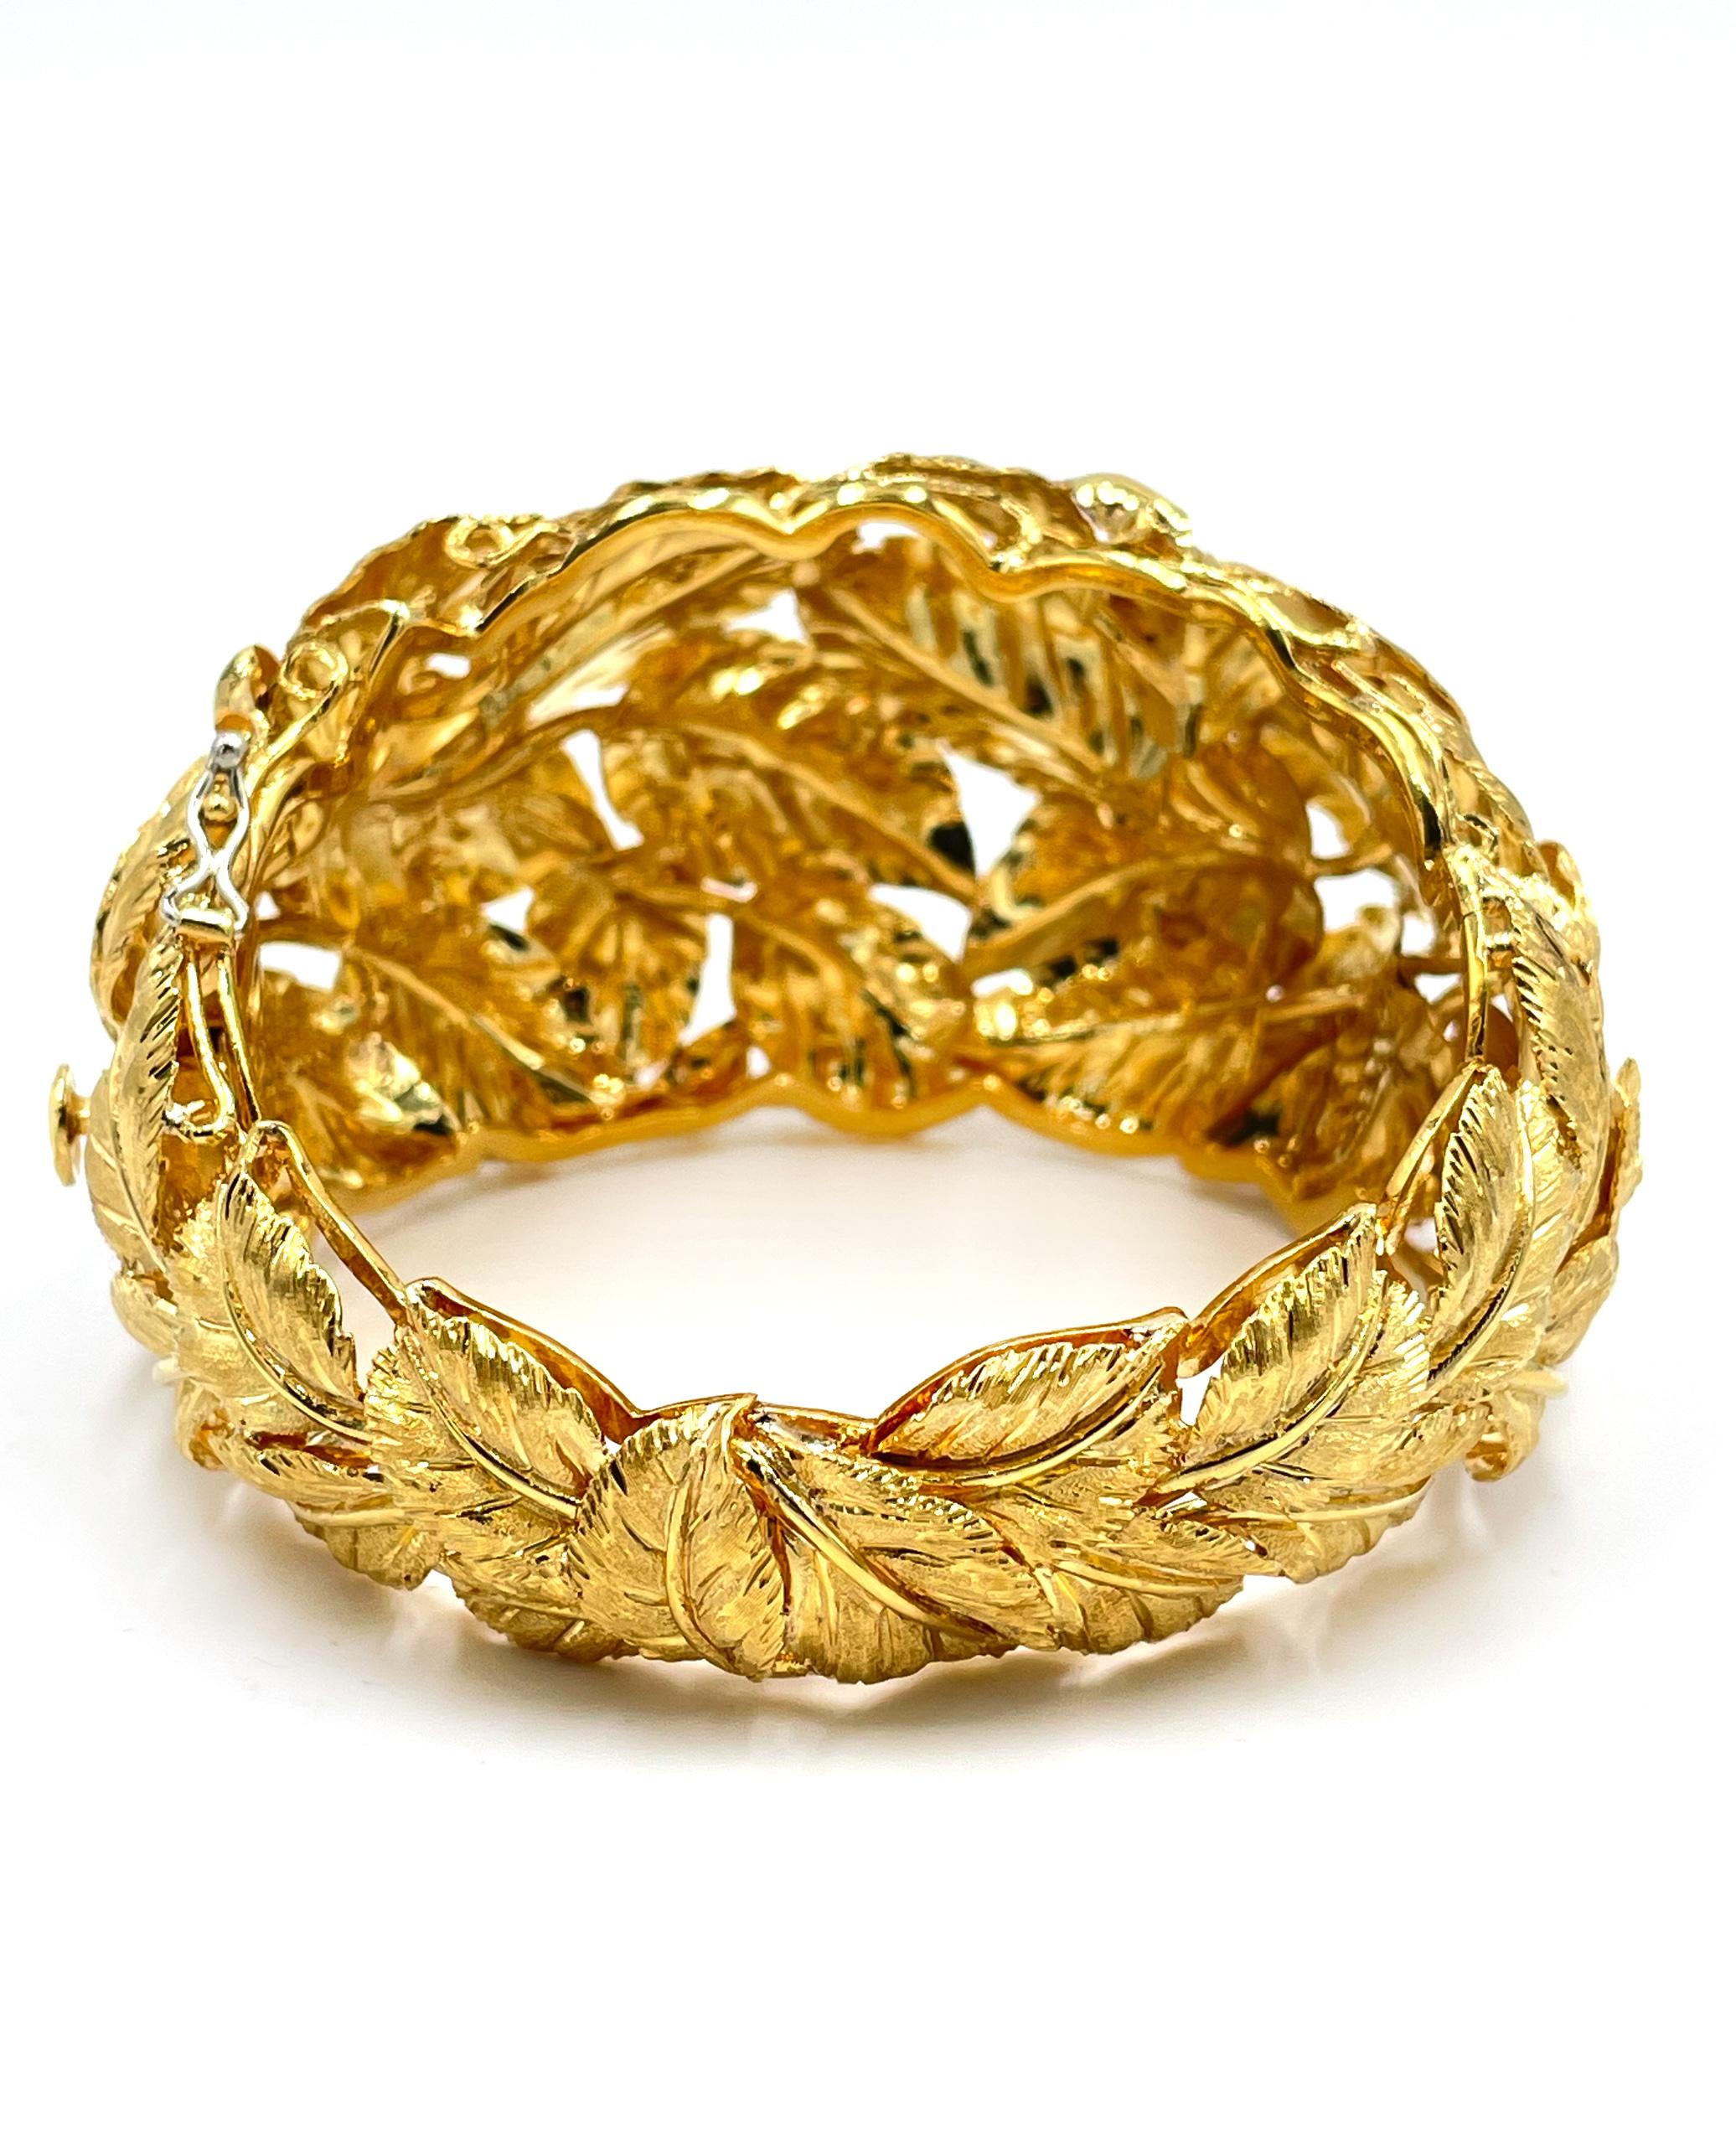 Preowned Vintage 18K Yellow Gold Italian Leaf Wide Statement Bracelet Pour femmes en vente